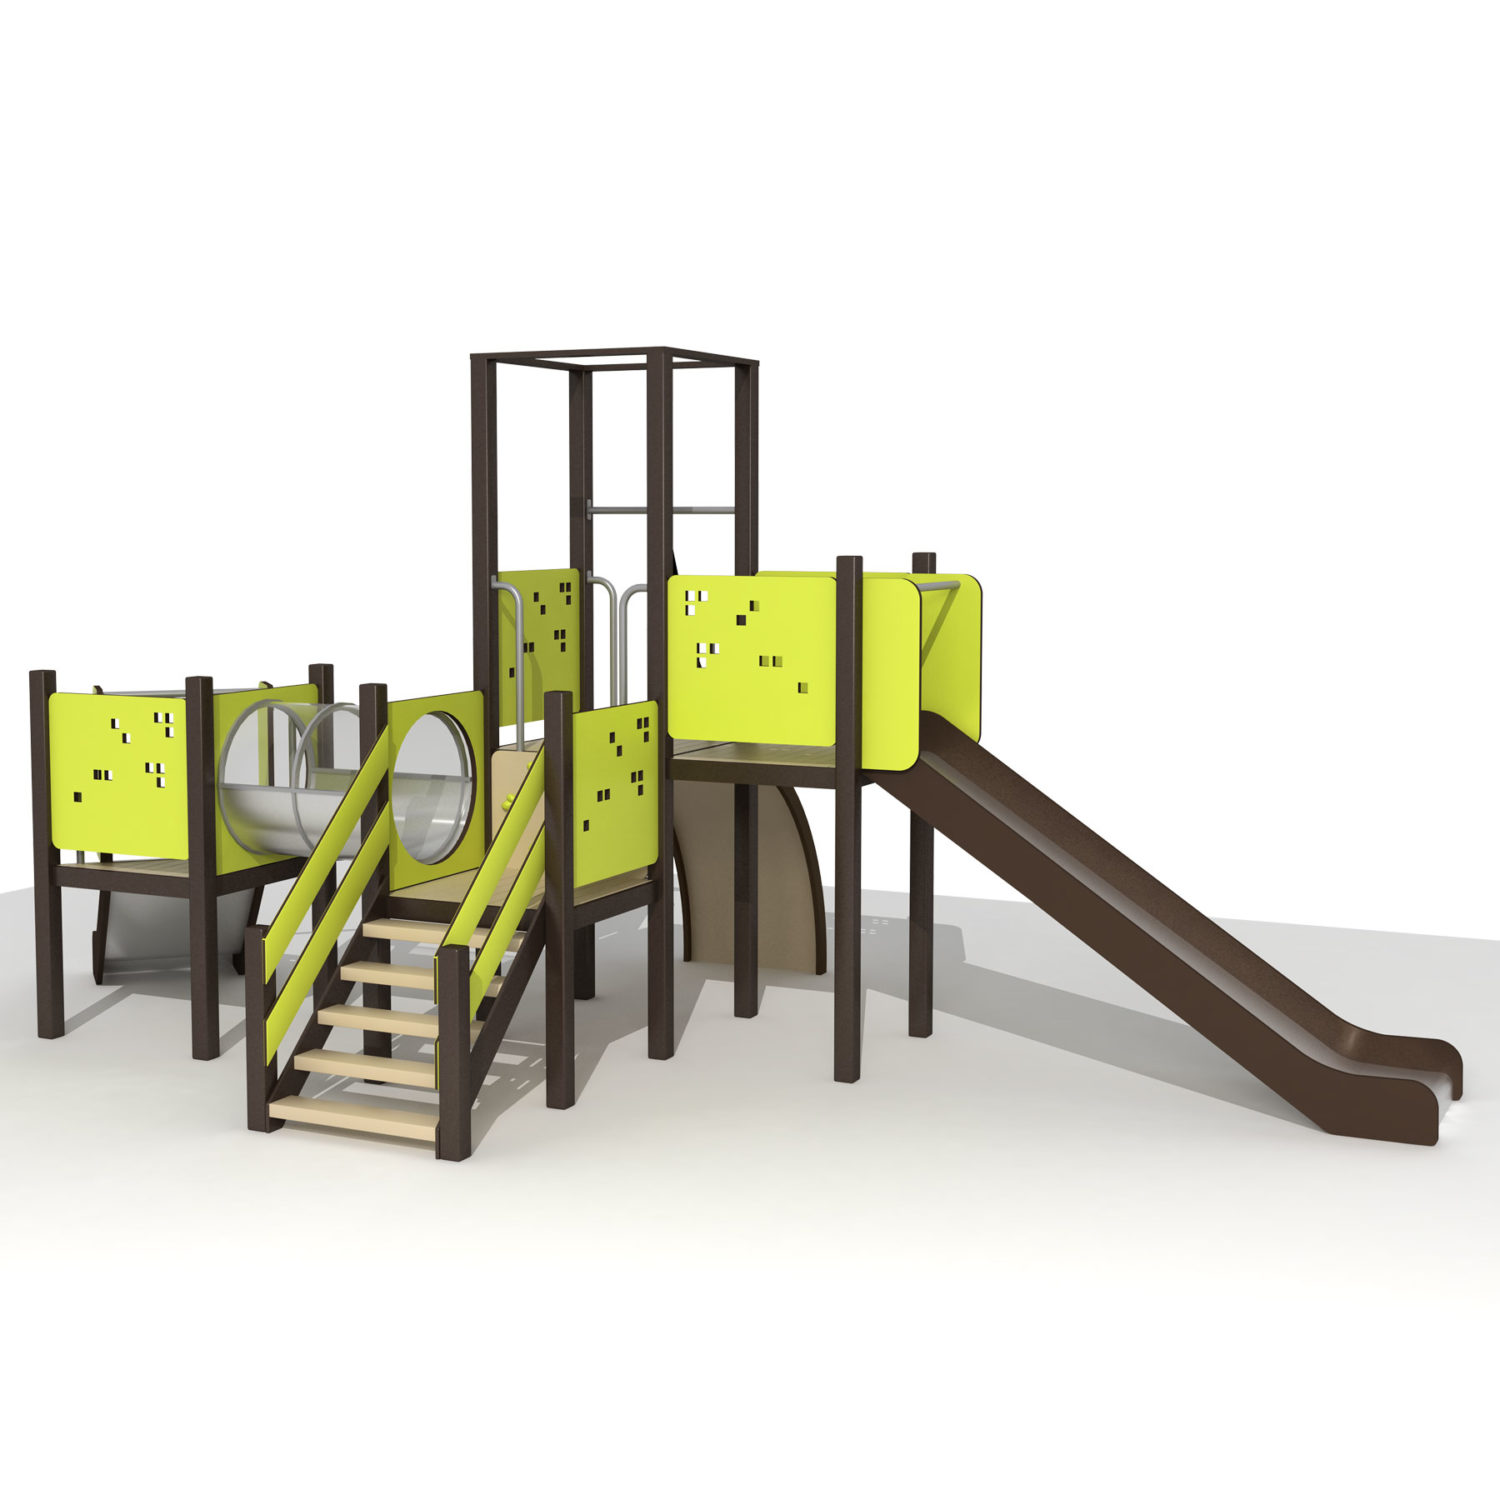 Wood Playground S1807 : สนามเด็กเล่นสไลด์เดอร์ 2 ทาง ลอดอุโมงค์ PRICE LEMON TREE